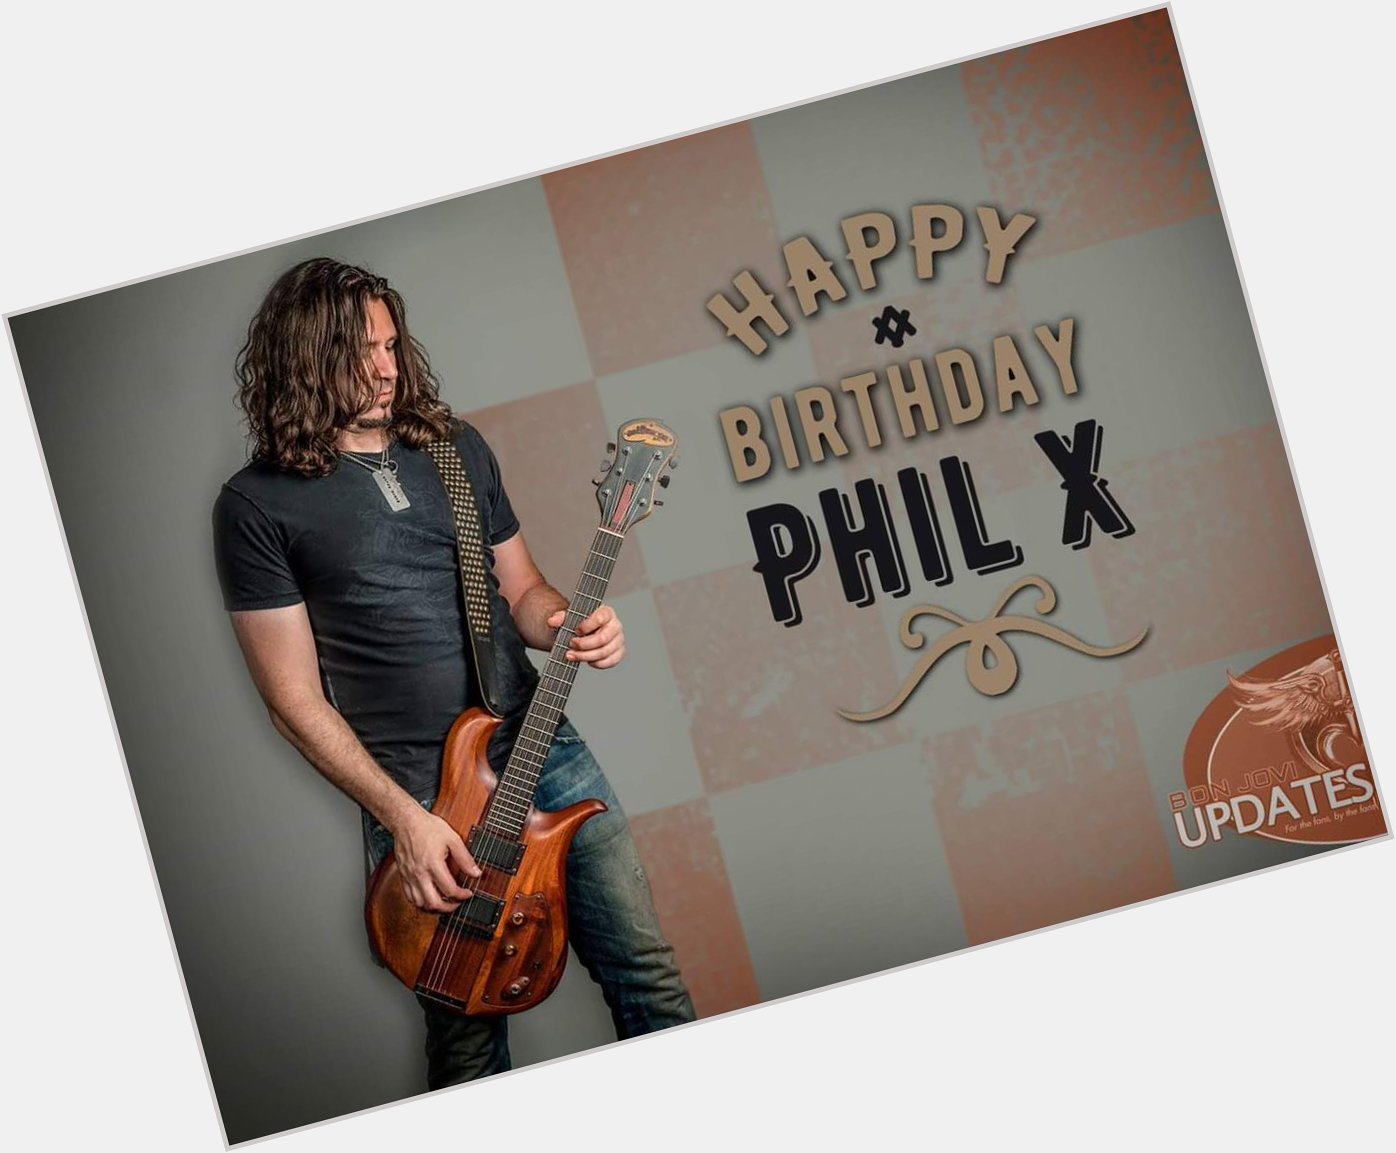 Happy Birthday Phil X. See you next weekend.  